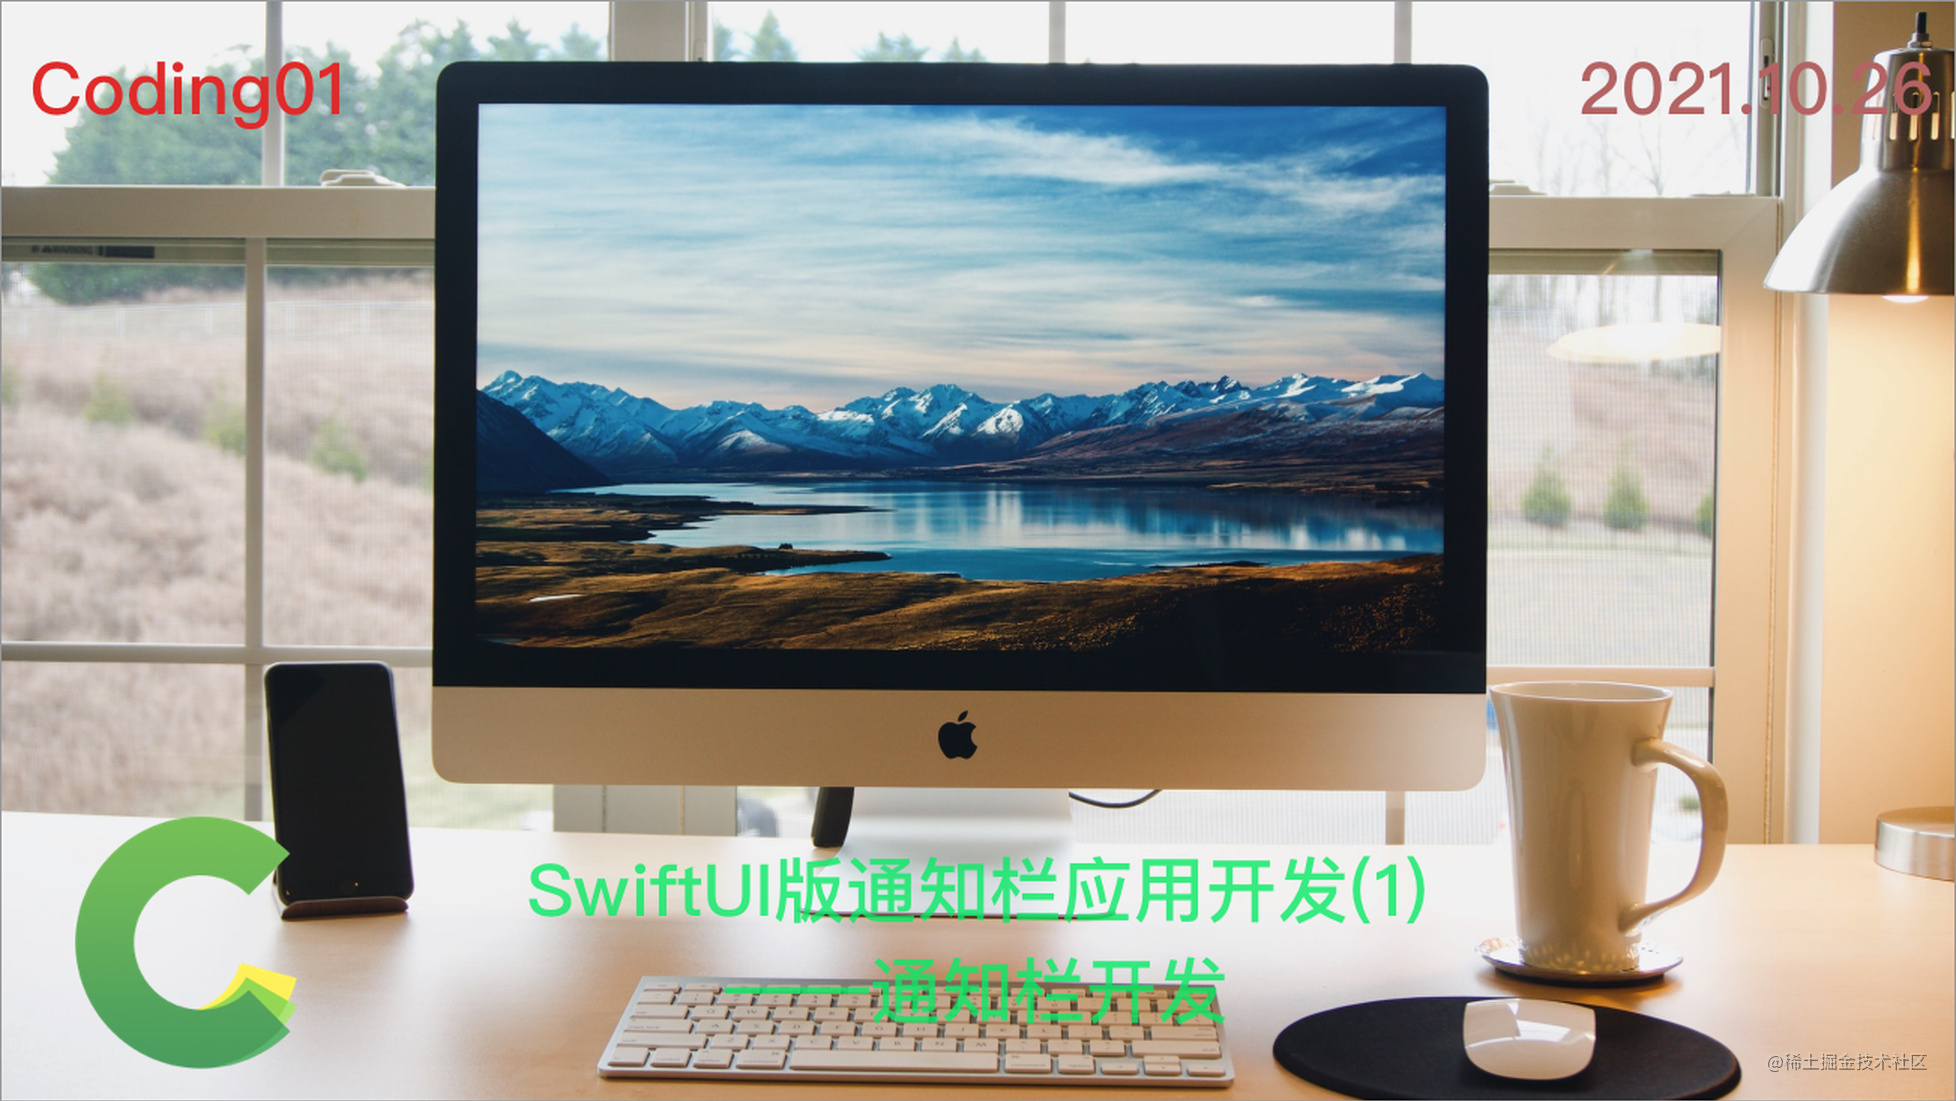 SwiftUI版通知栏应用开发(1) ——通知栏开发